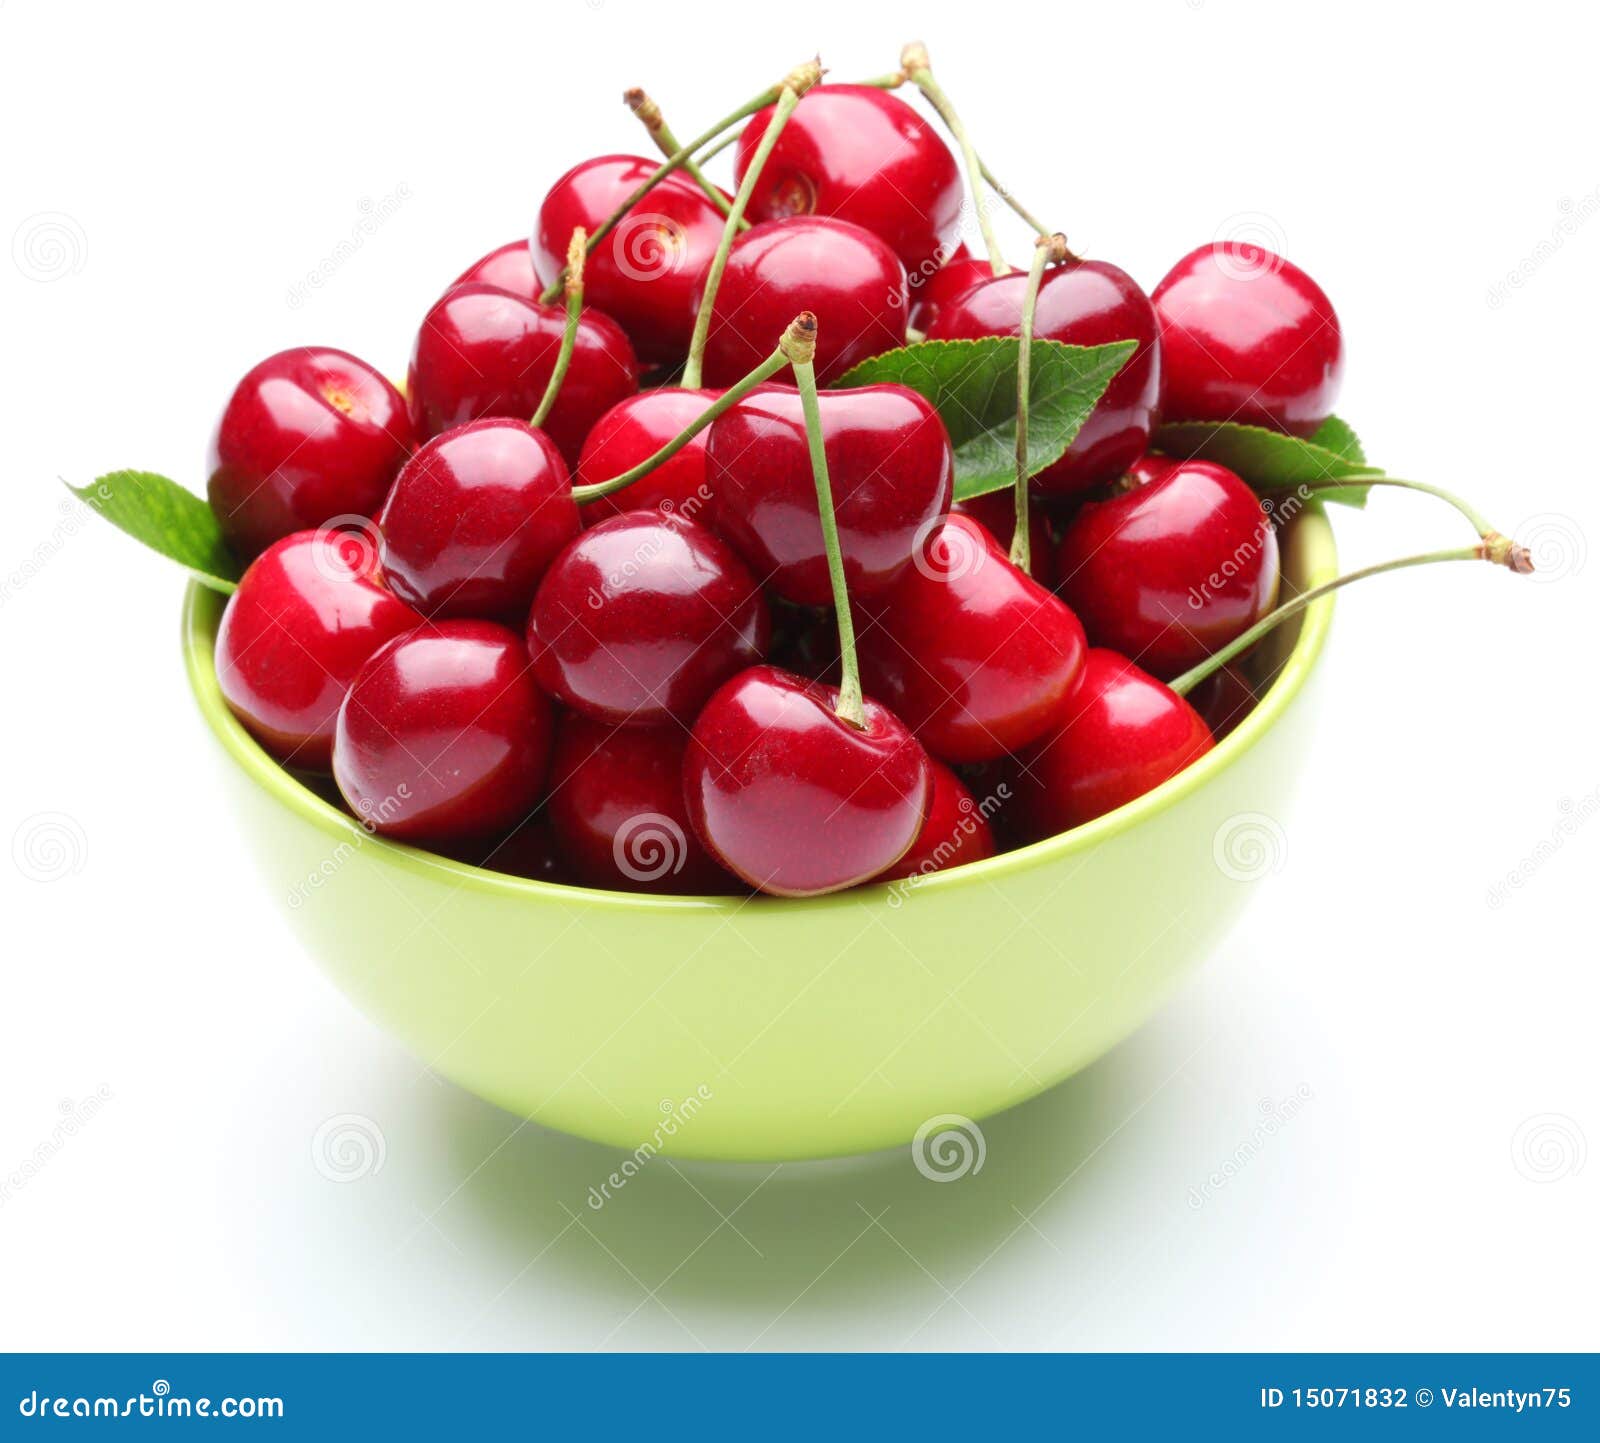 crockery with cherries.